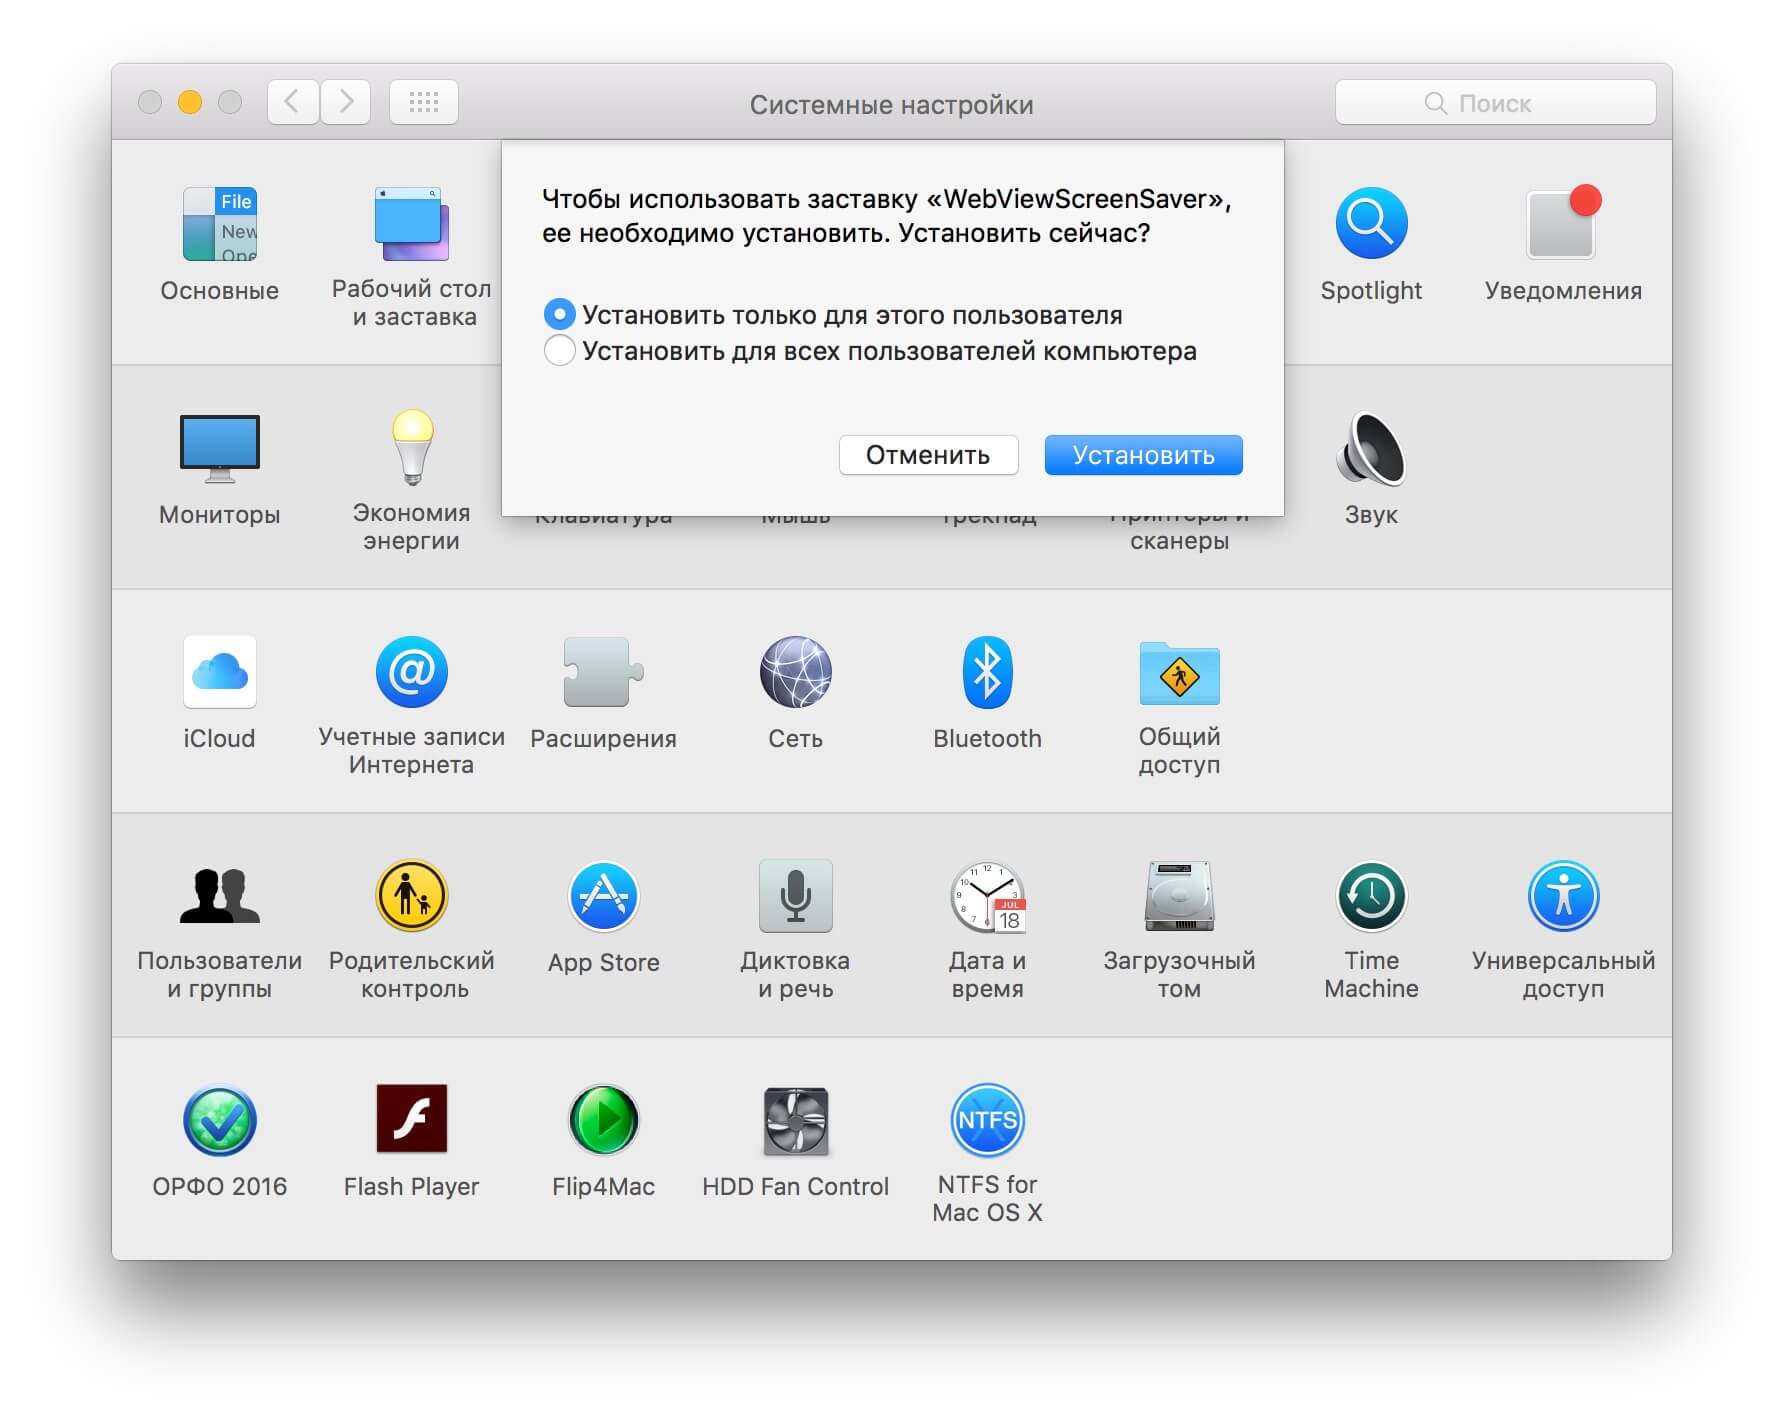 instal the new for apple PreviSat 6.0.0.15